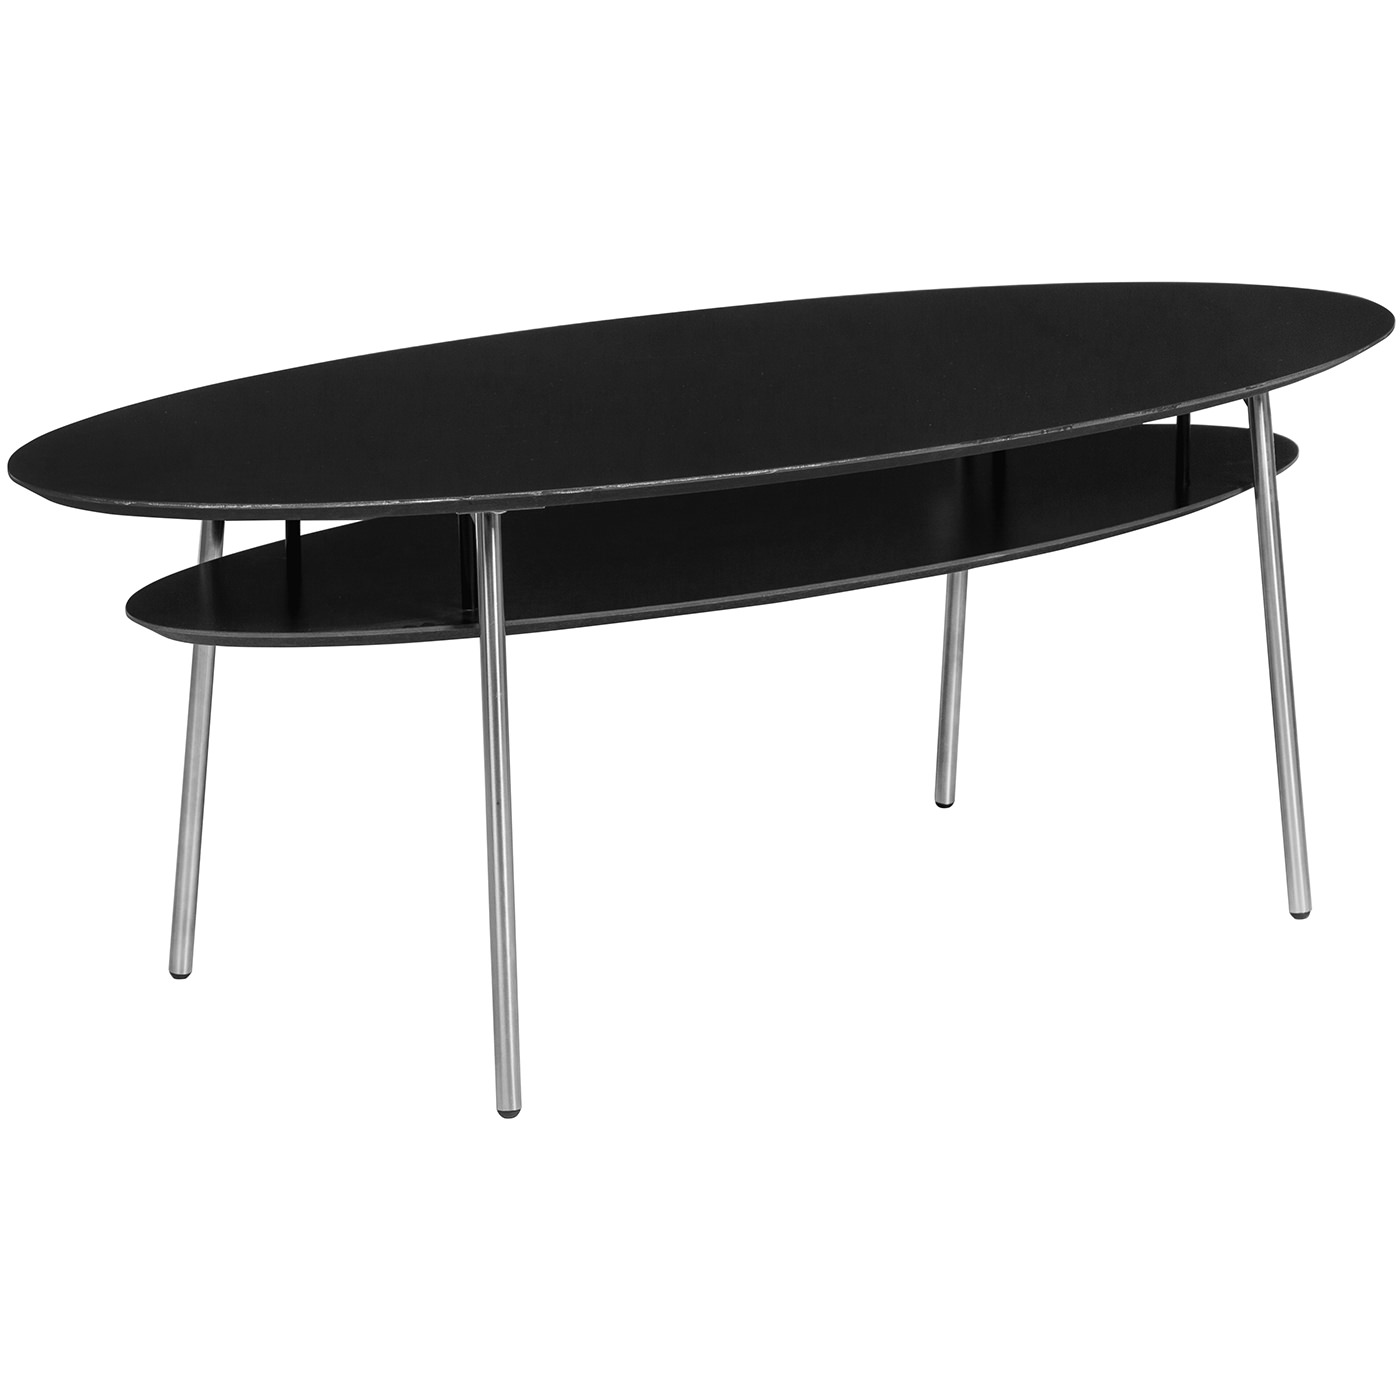 TI 1529 008 3 – Spark Coffee Table XL Black (2)